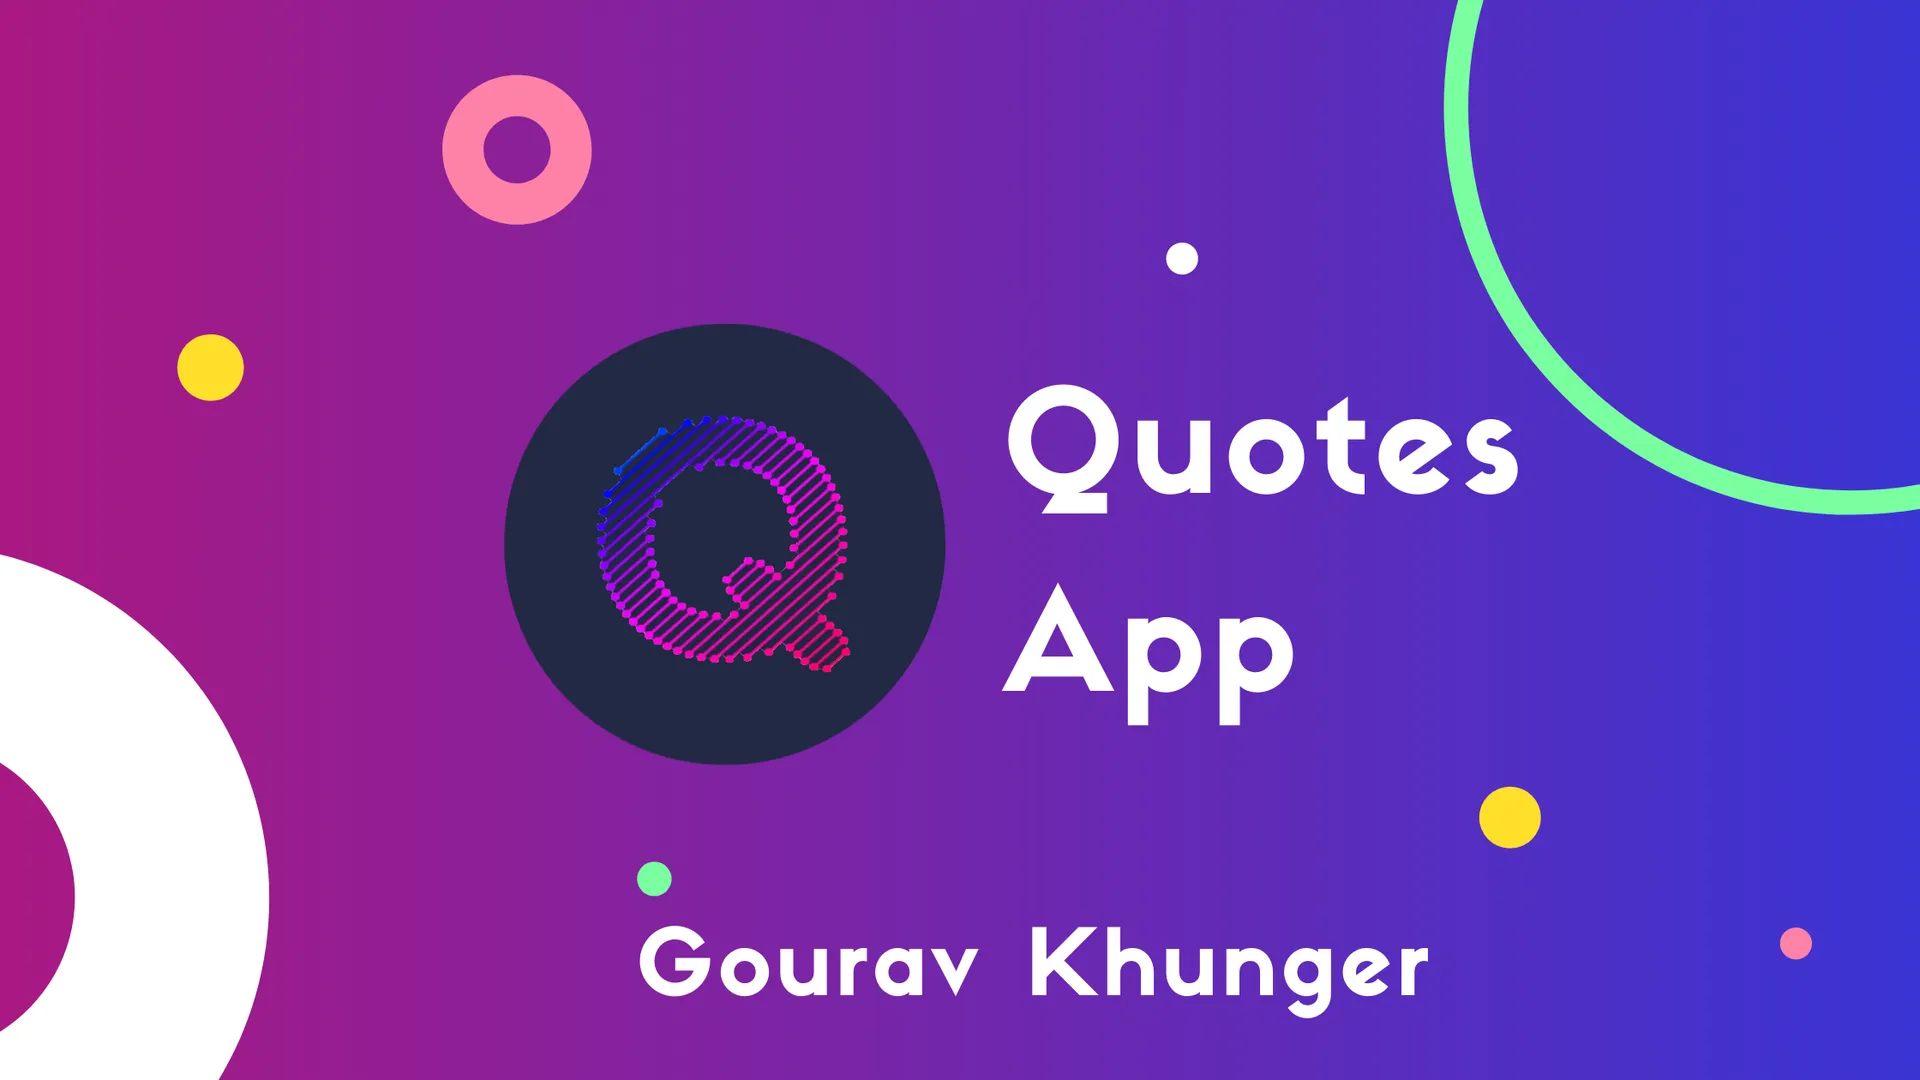 Introducing Quotes App